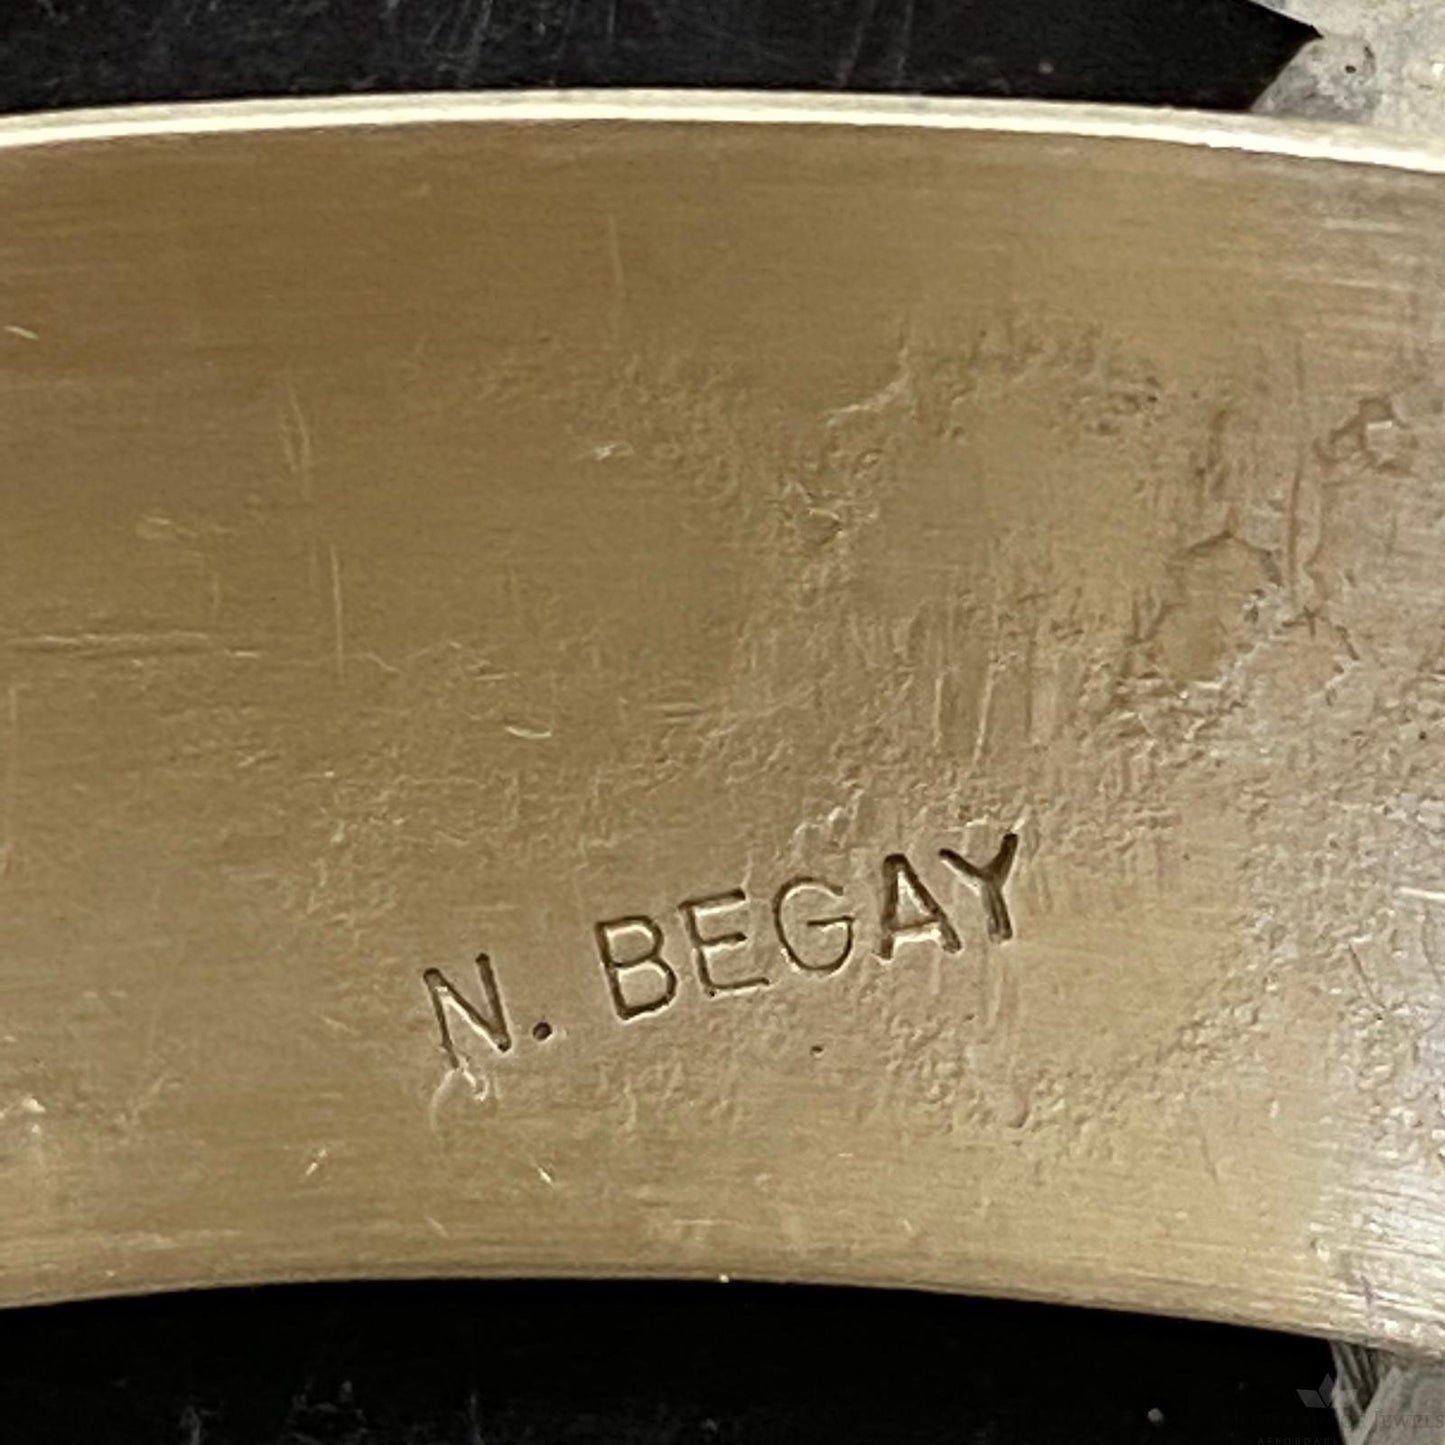 N. Begay Vintage Native American Sterling Silver Stamped Bracelet For Women